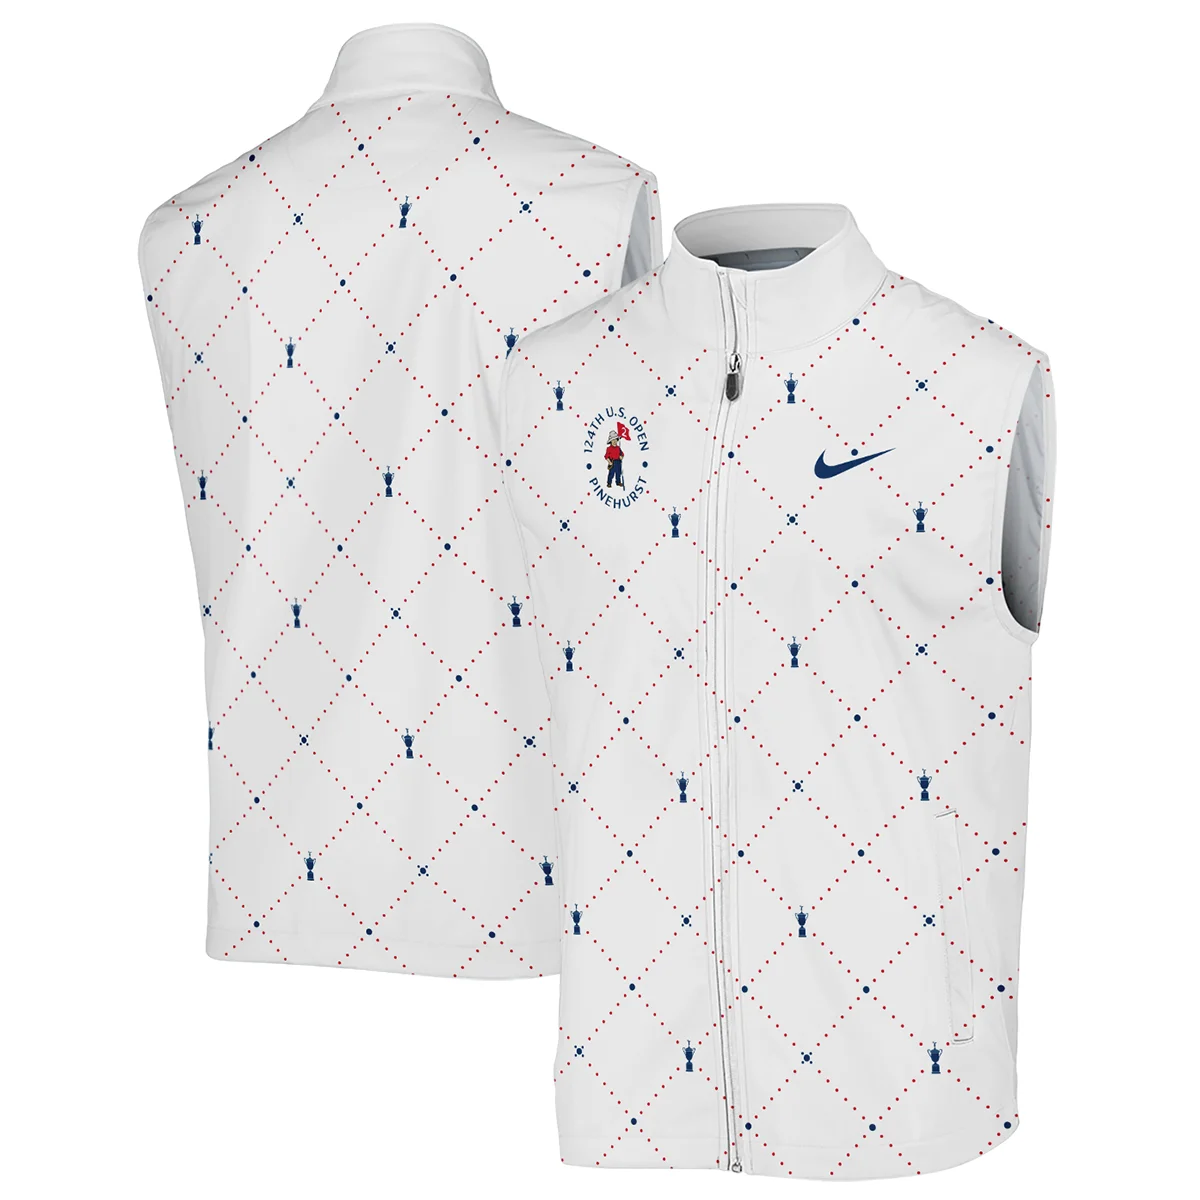 Argyle Pattern With Cup 124th U.S. Open Pinehurst Nike Zipper Polo Shirt Style Classic Zipper Polo Shirt For Men